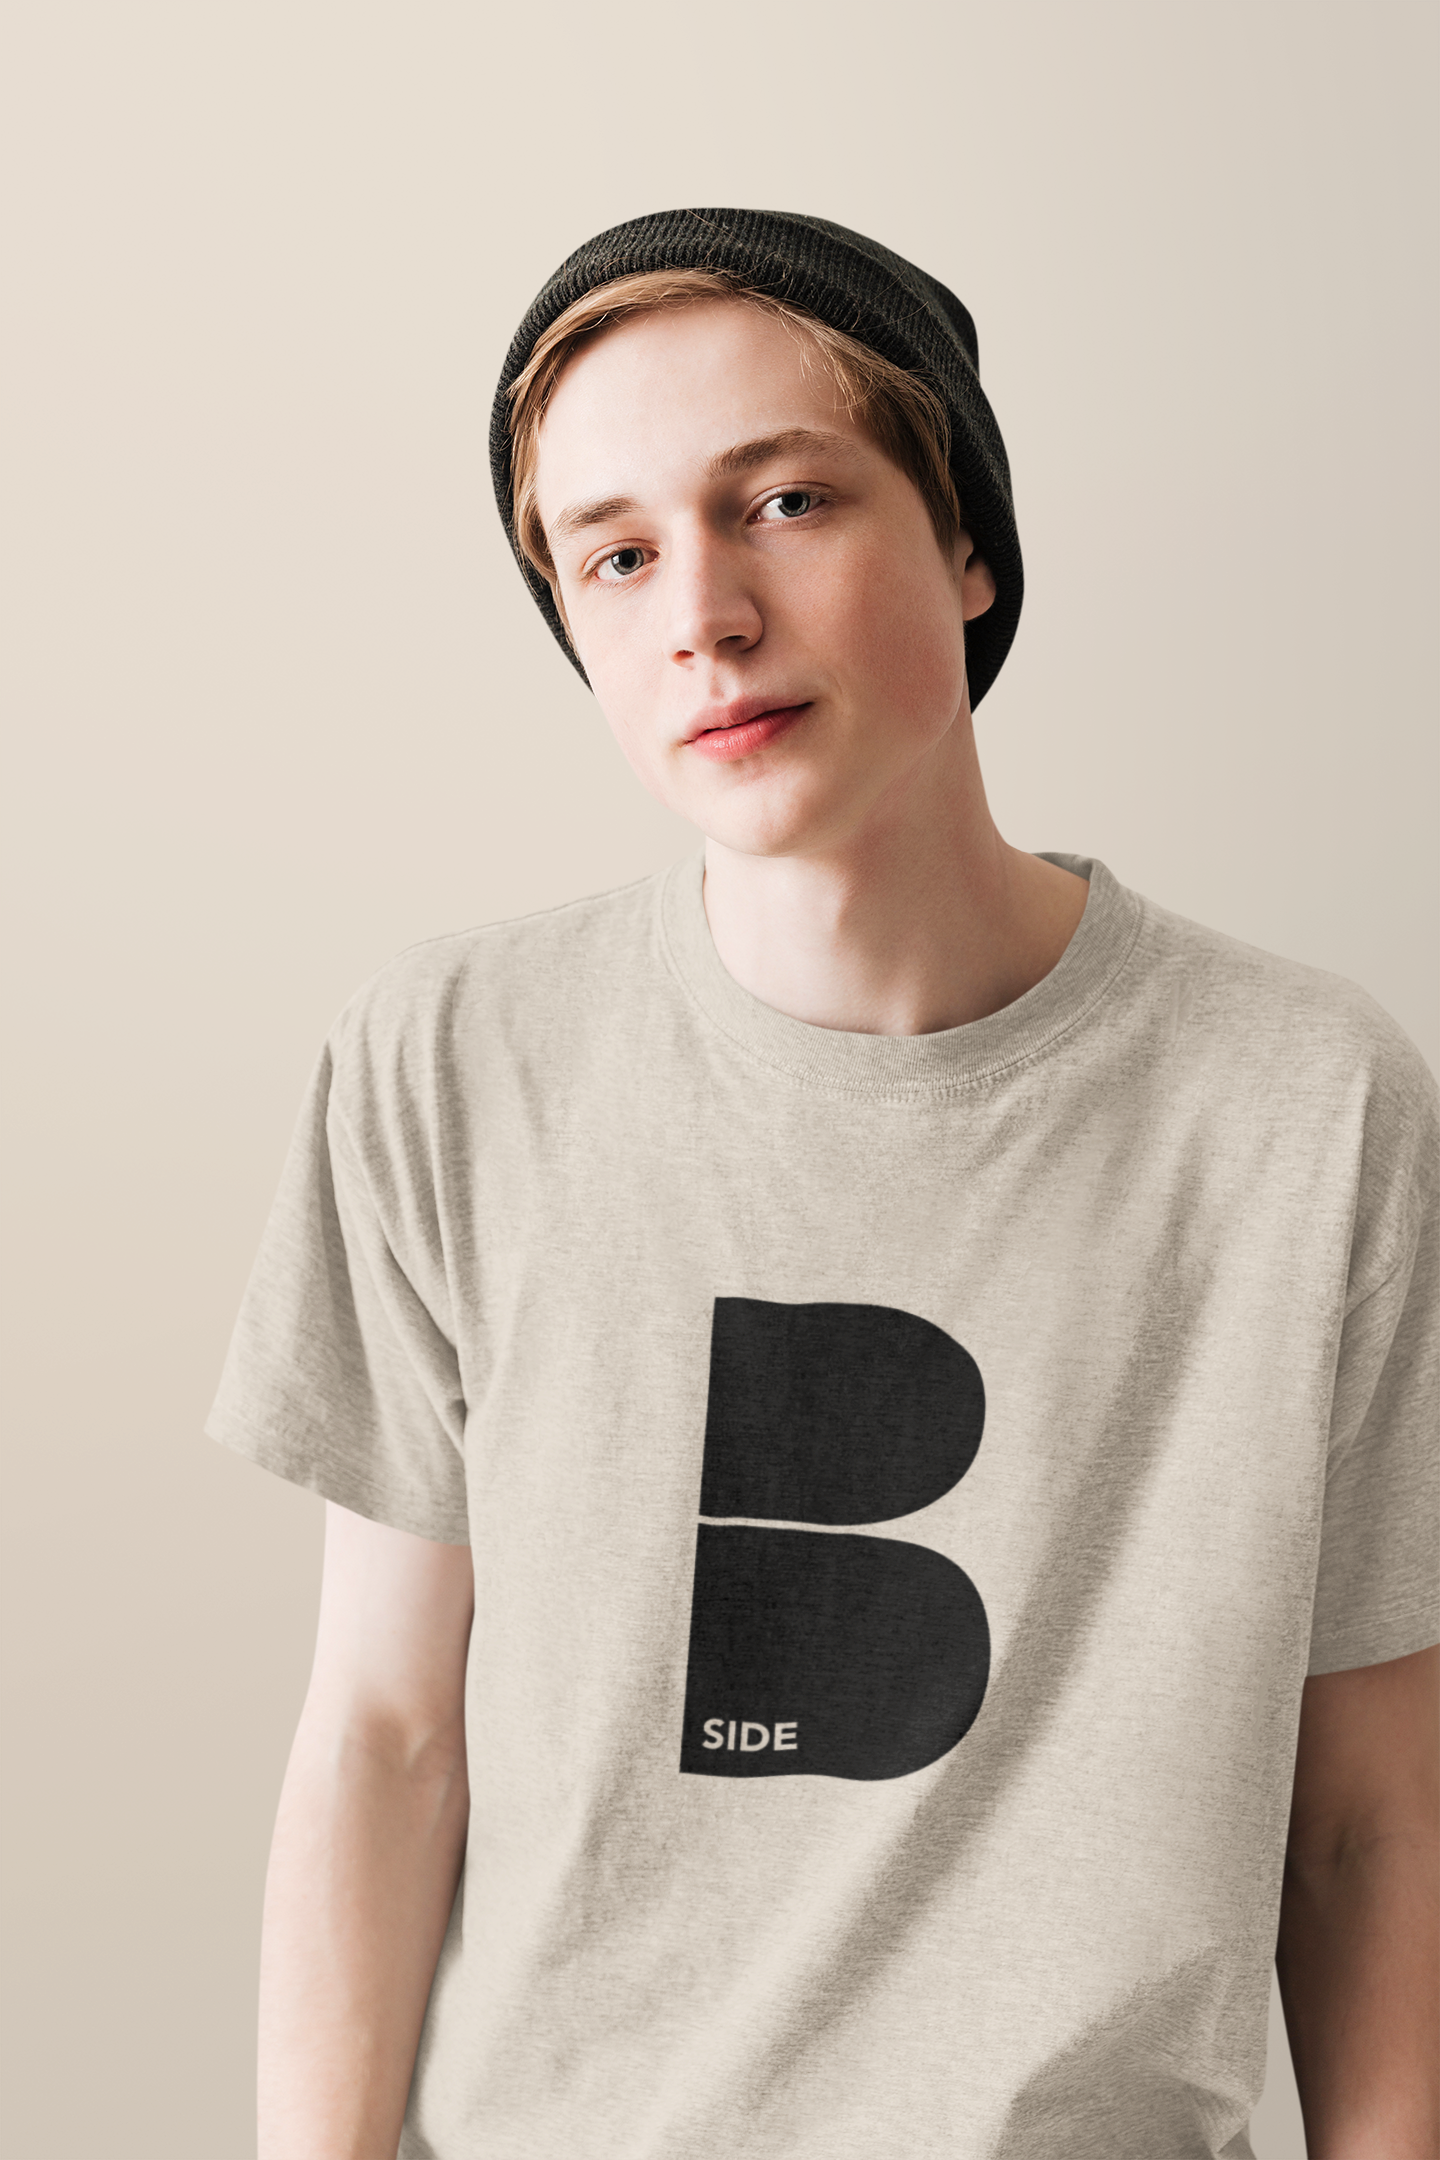 Cream Original B Logo T-Shirt - Black Print